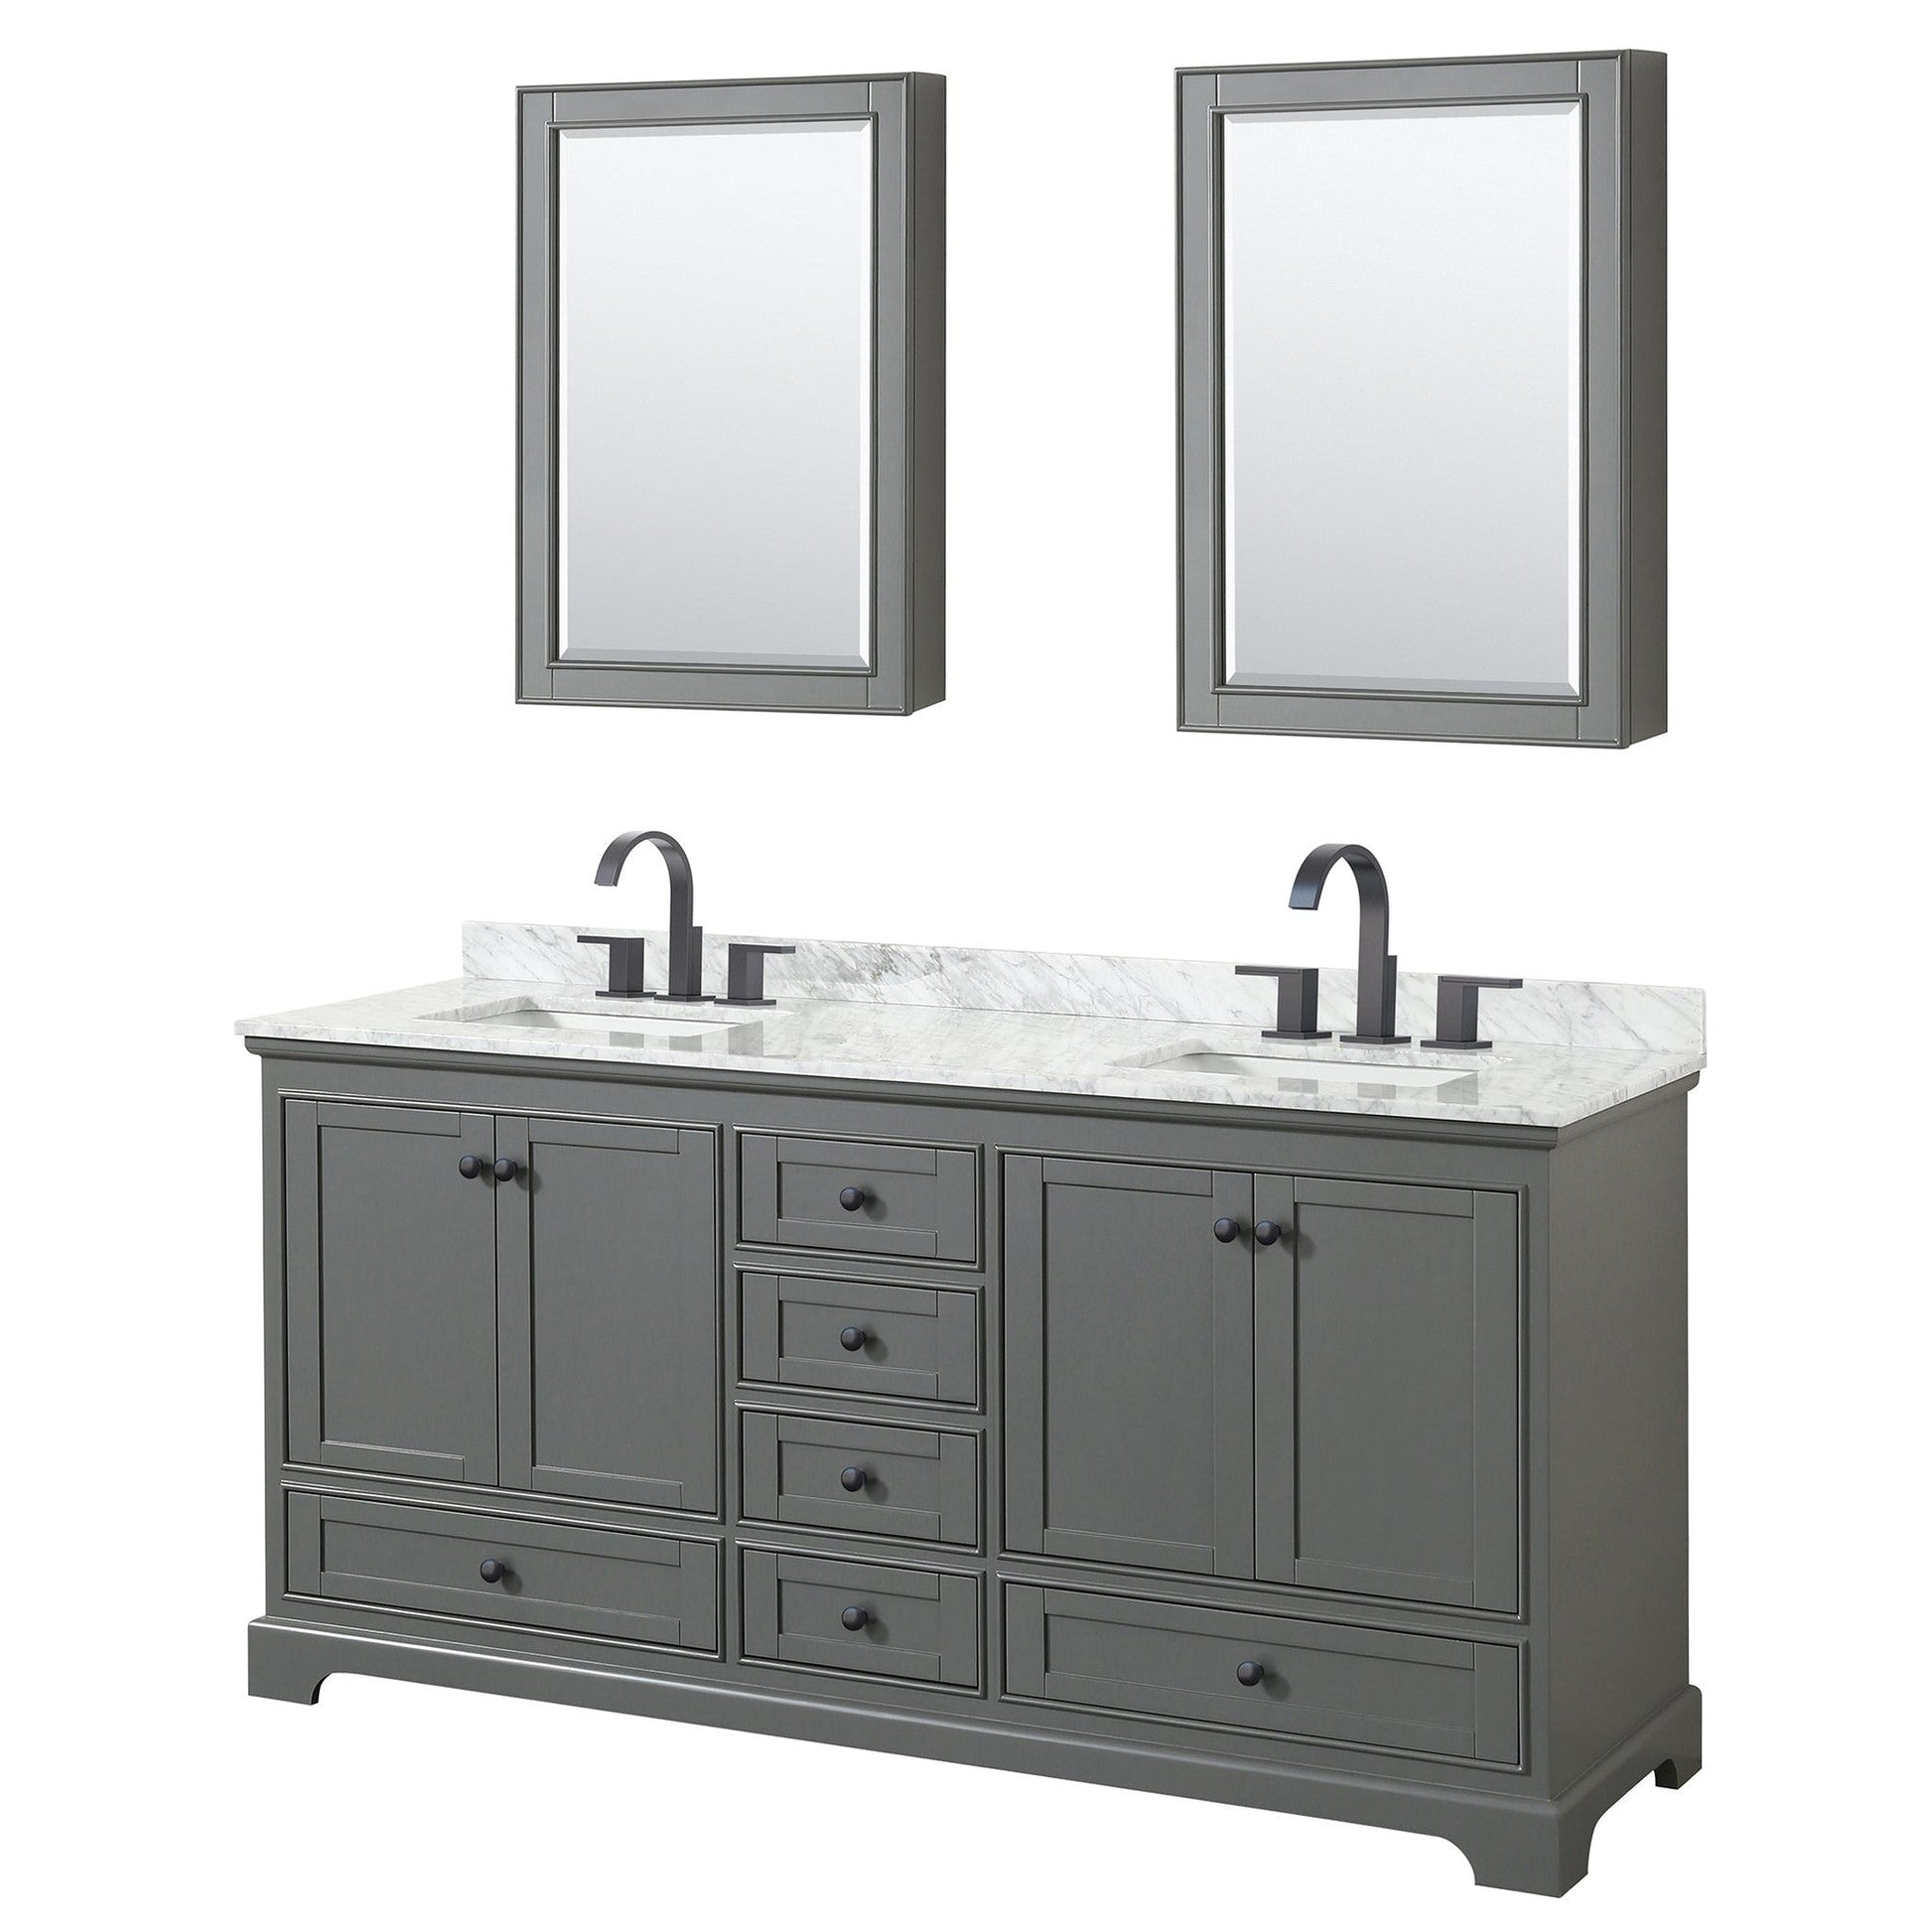 Deborah 72" Double Bathroom Vanity in Dark Gray, White Carrara Marble Countertop, Undermount Square Sinks, Matte Black Trim, Medicine Cabinets